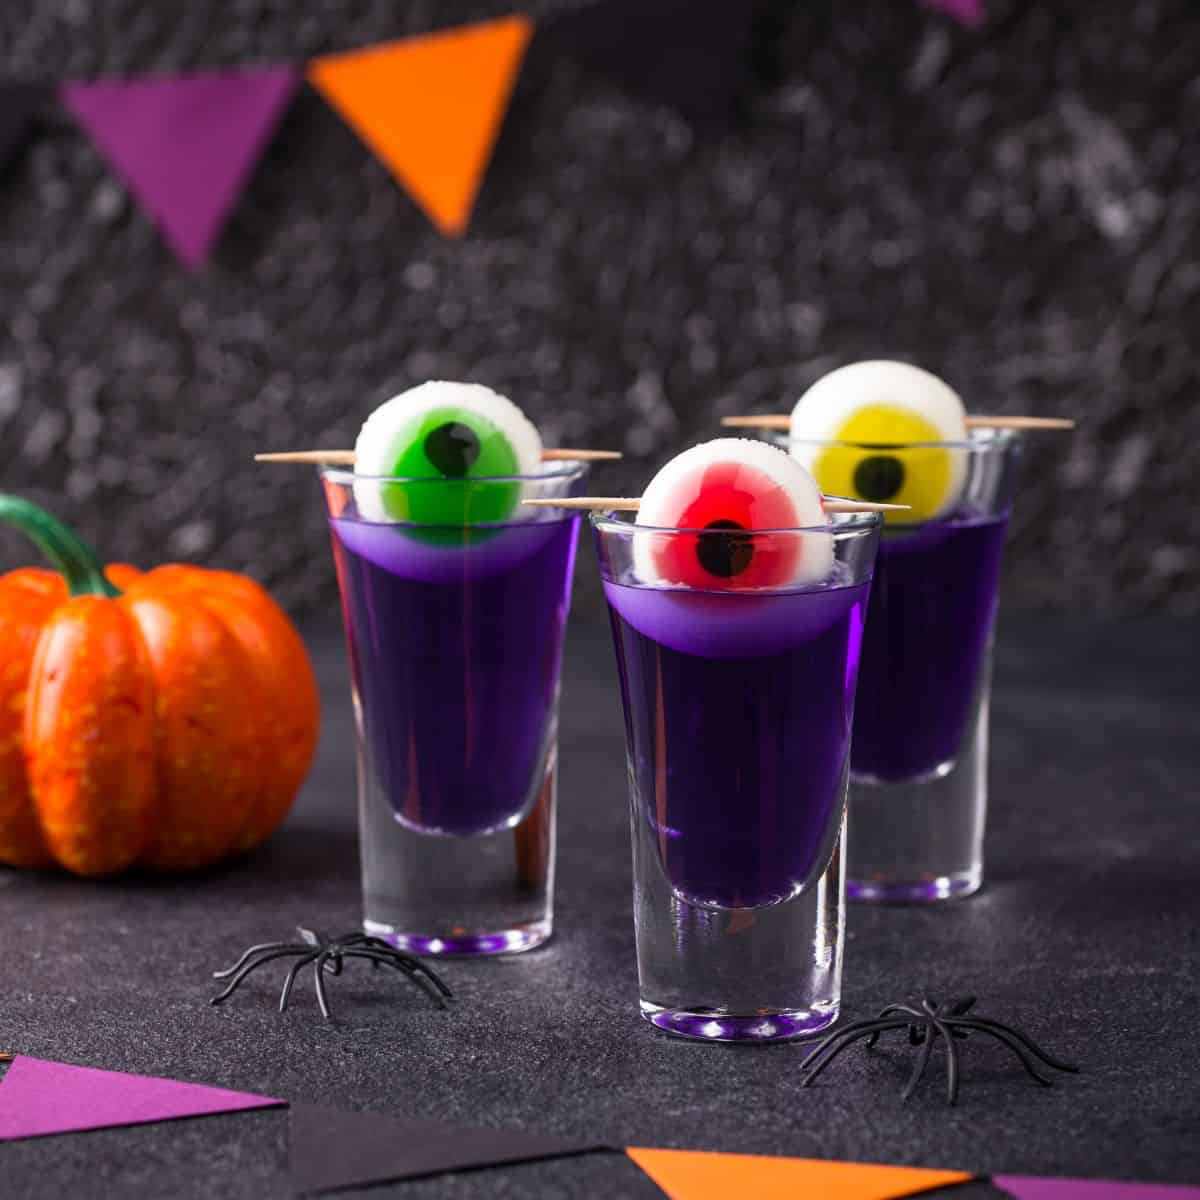 Spooky Halloween shots with eyeballs inside.